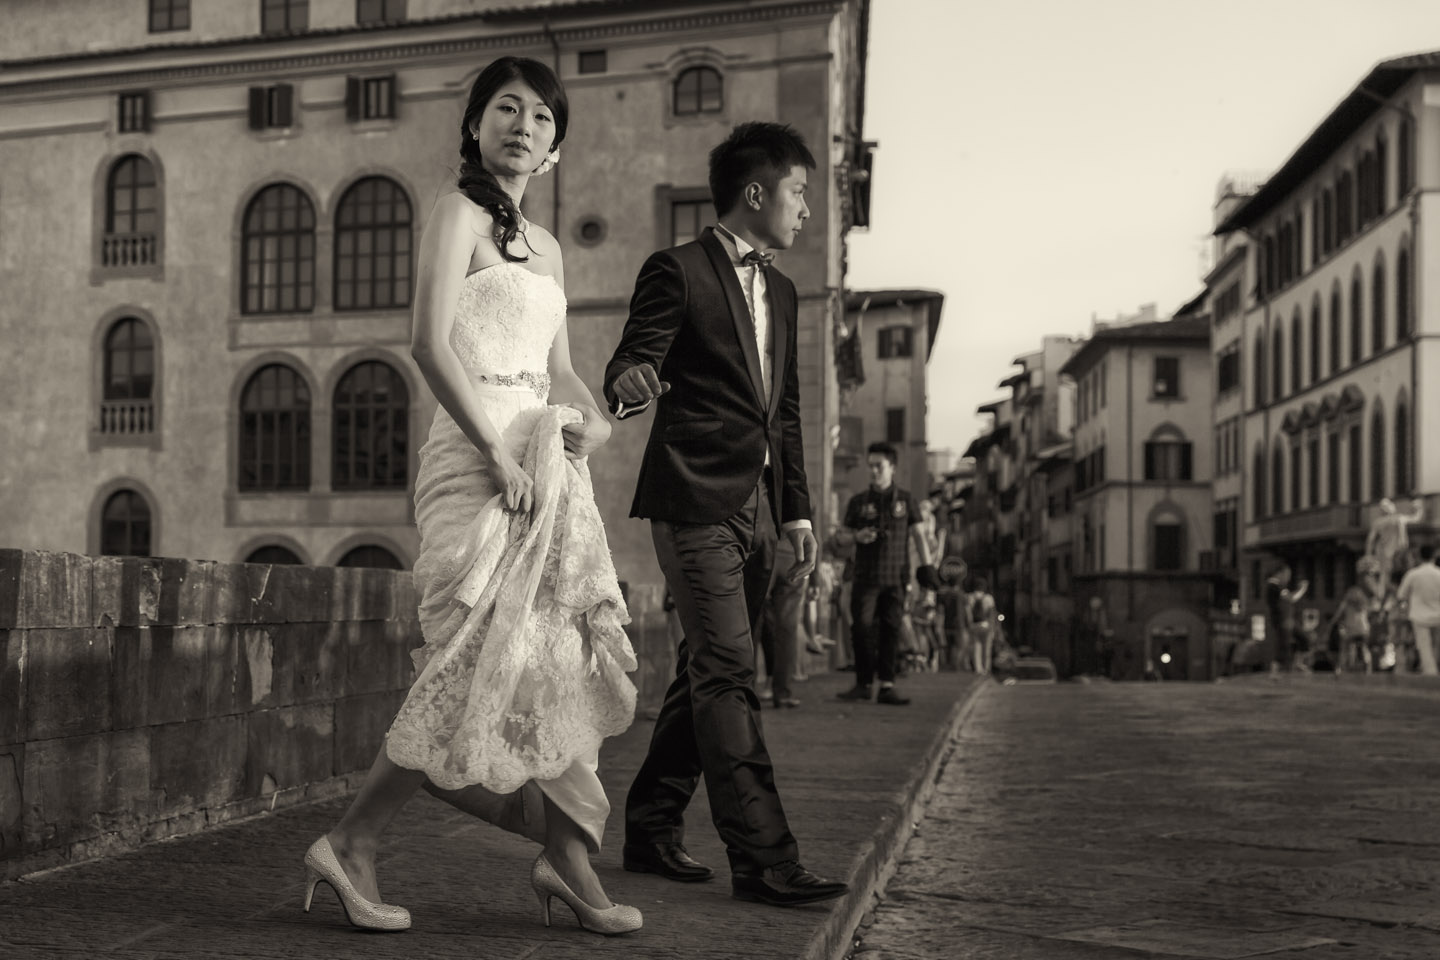 Wedding (street photography)